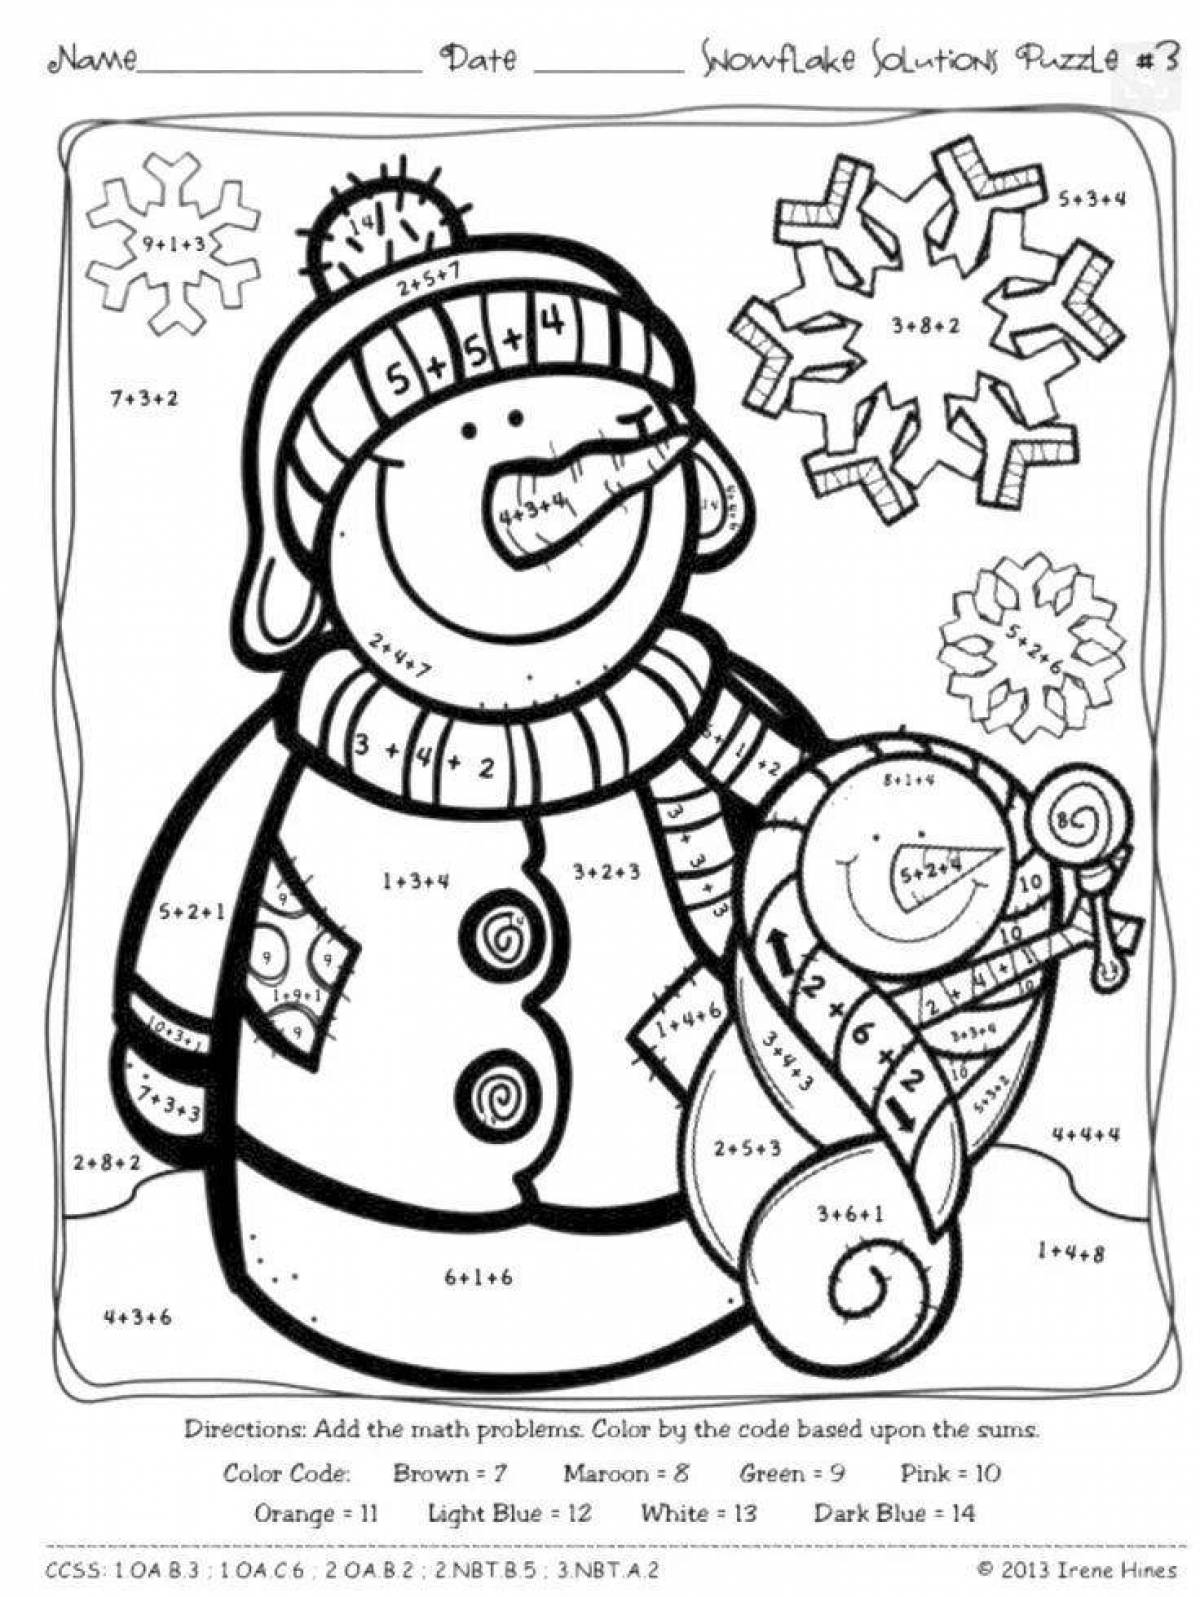 Joyful coloring math snowman